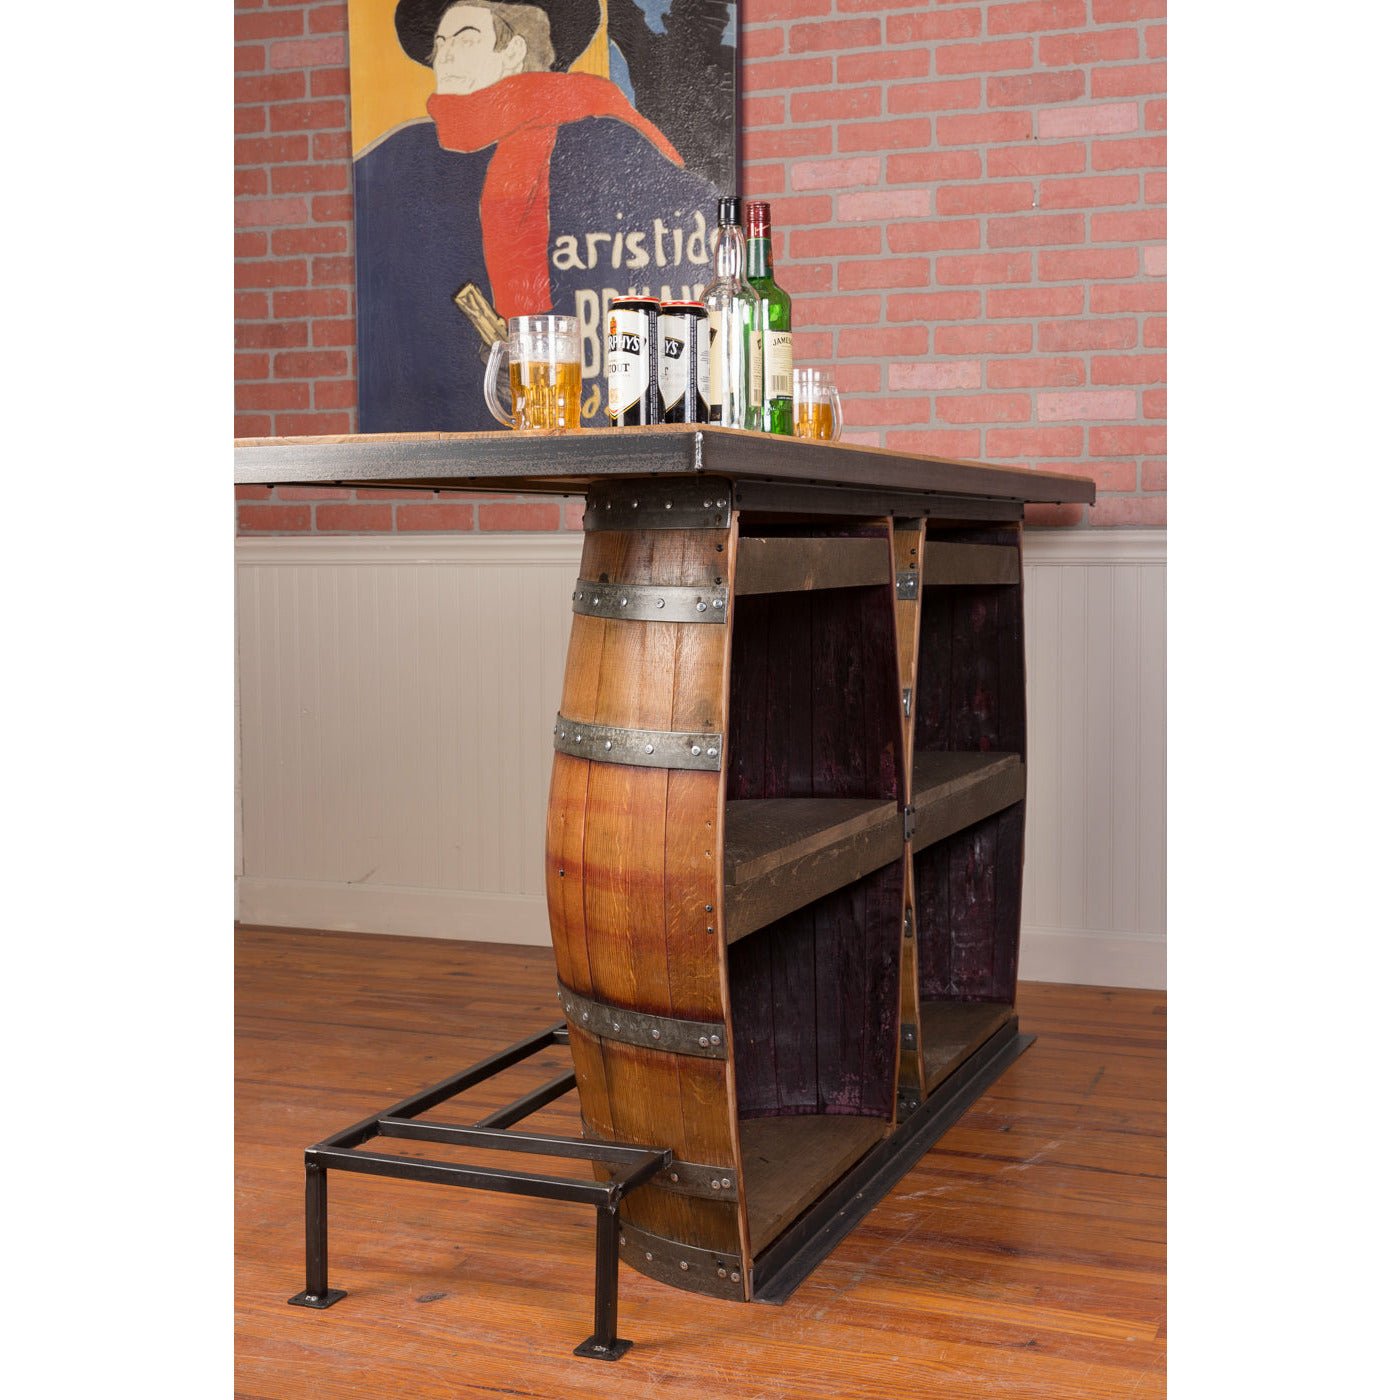 Napa East Double Wine Barrel Bar - The Bar Design